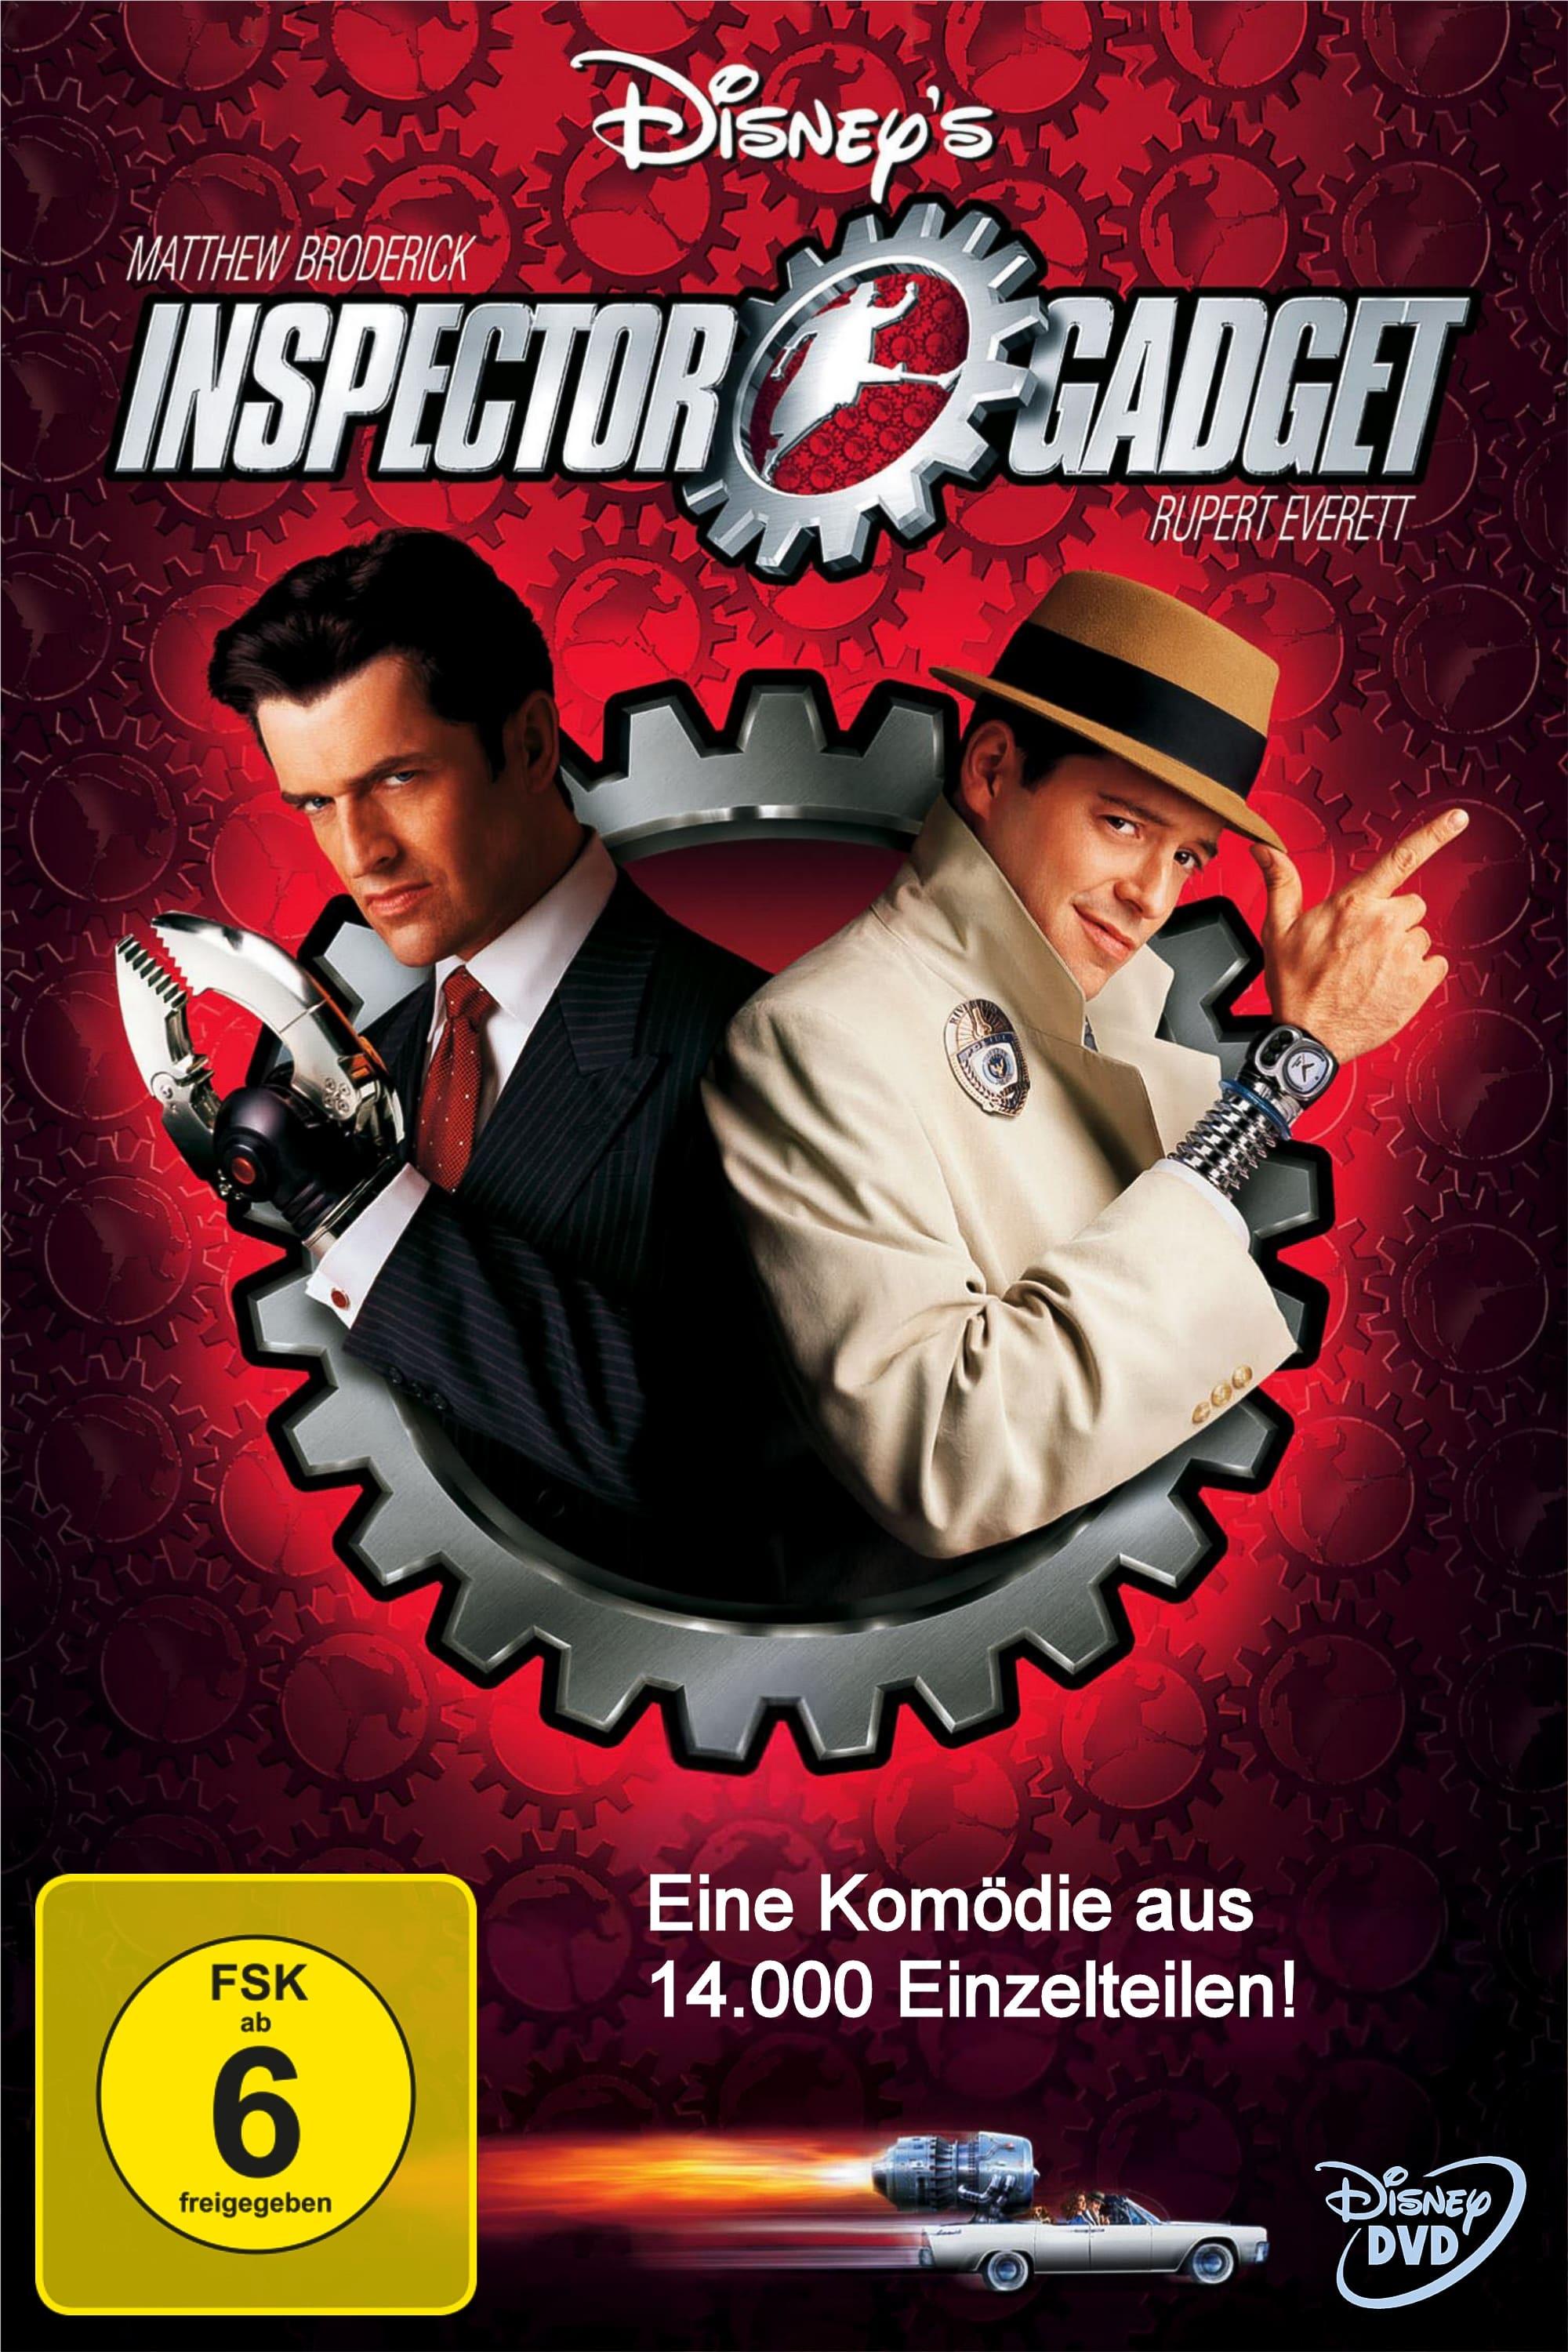 Inspektor Gadget poster